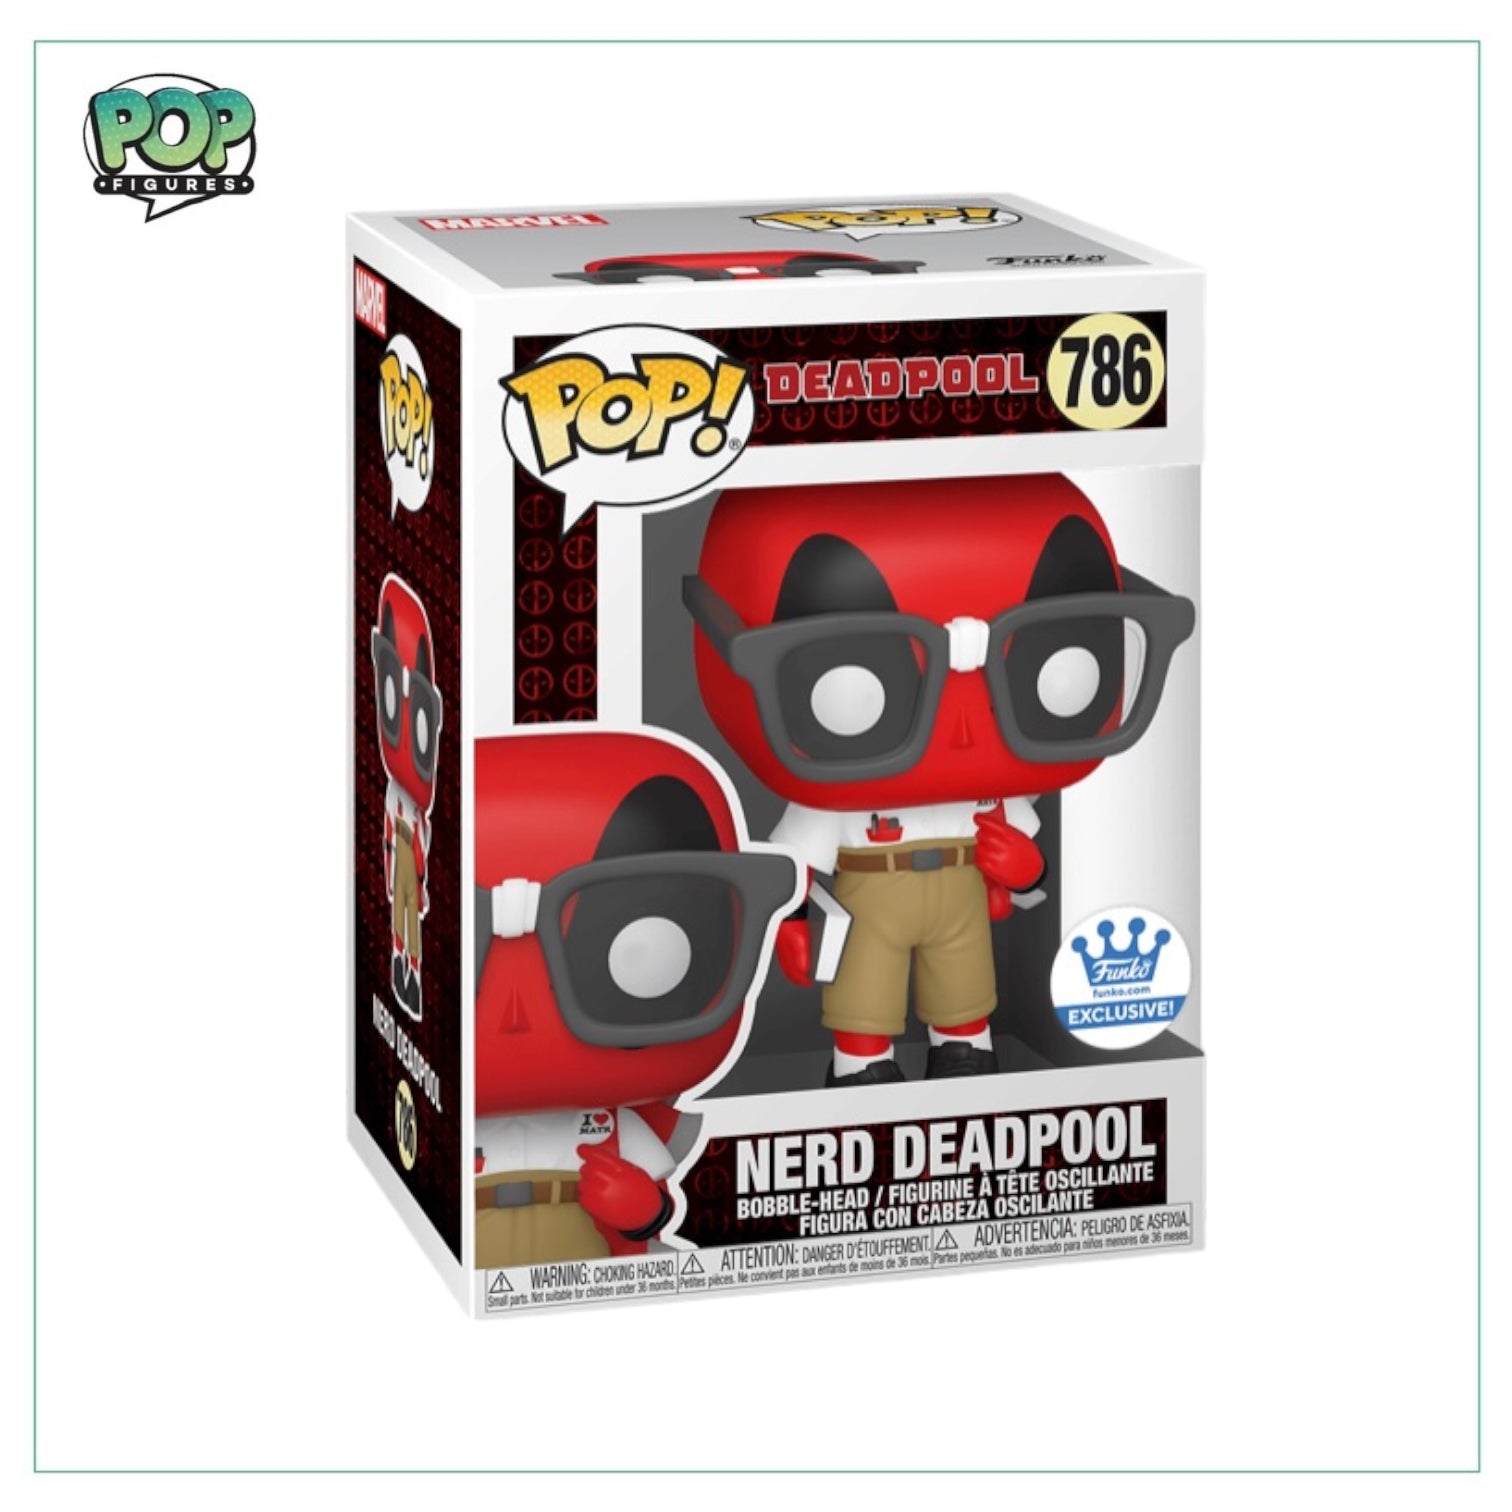 Funko Pop! Marvel Universe Deadpool SDCC Figure #20 - US